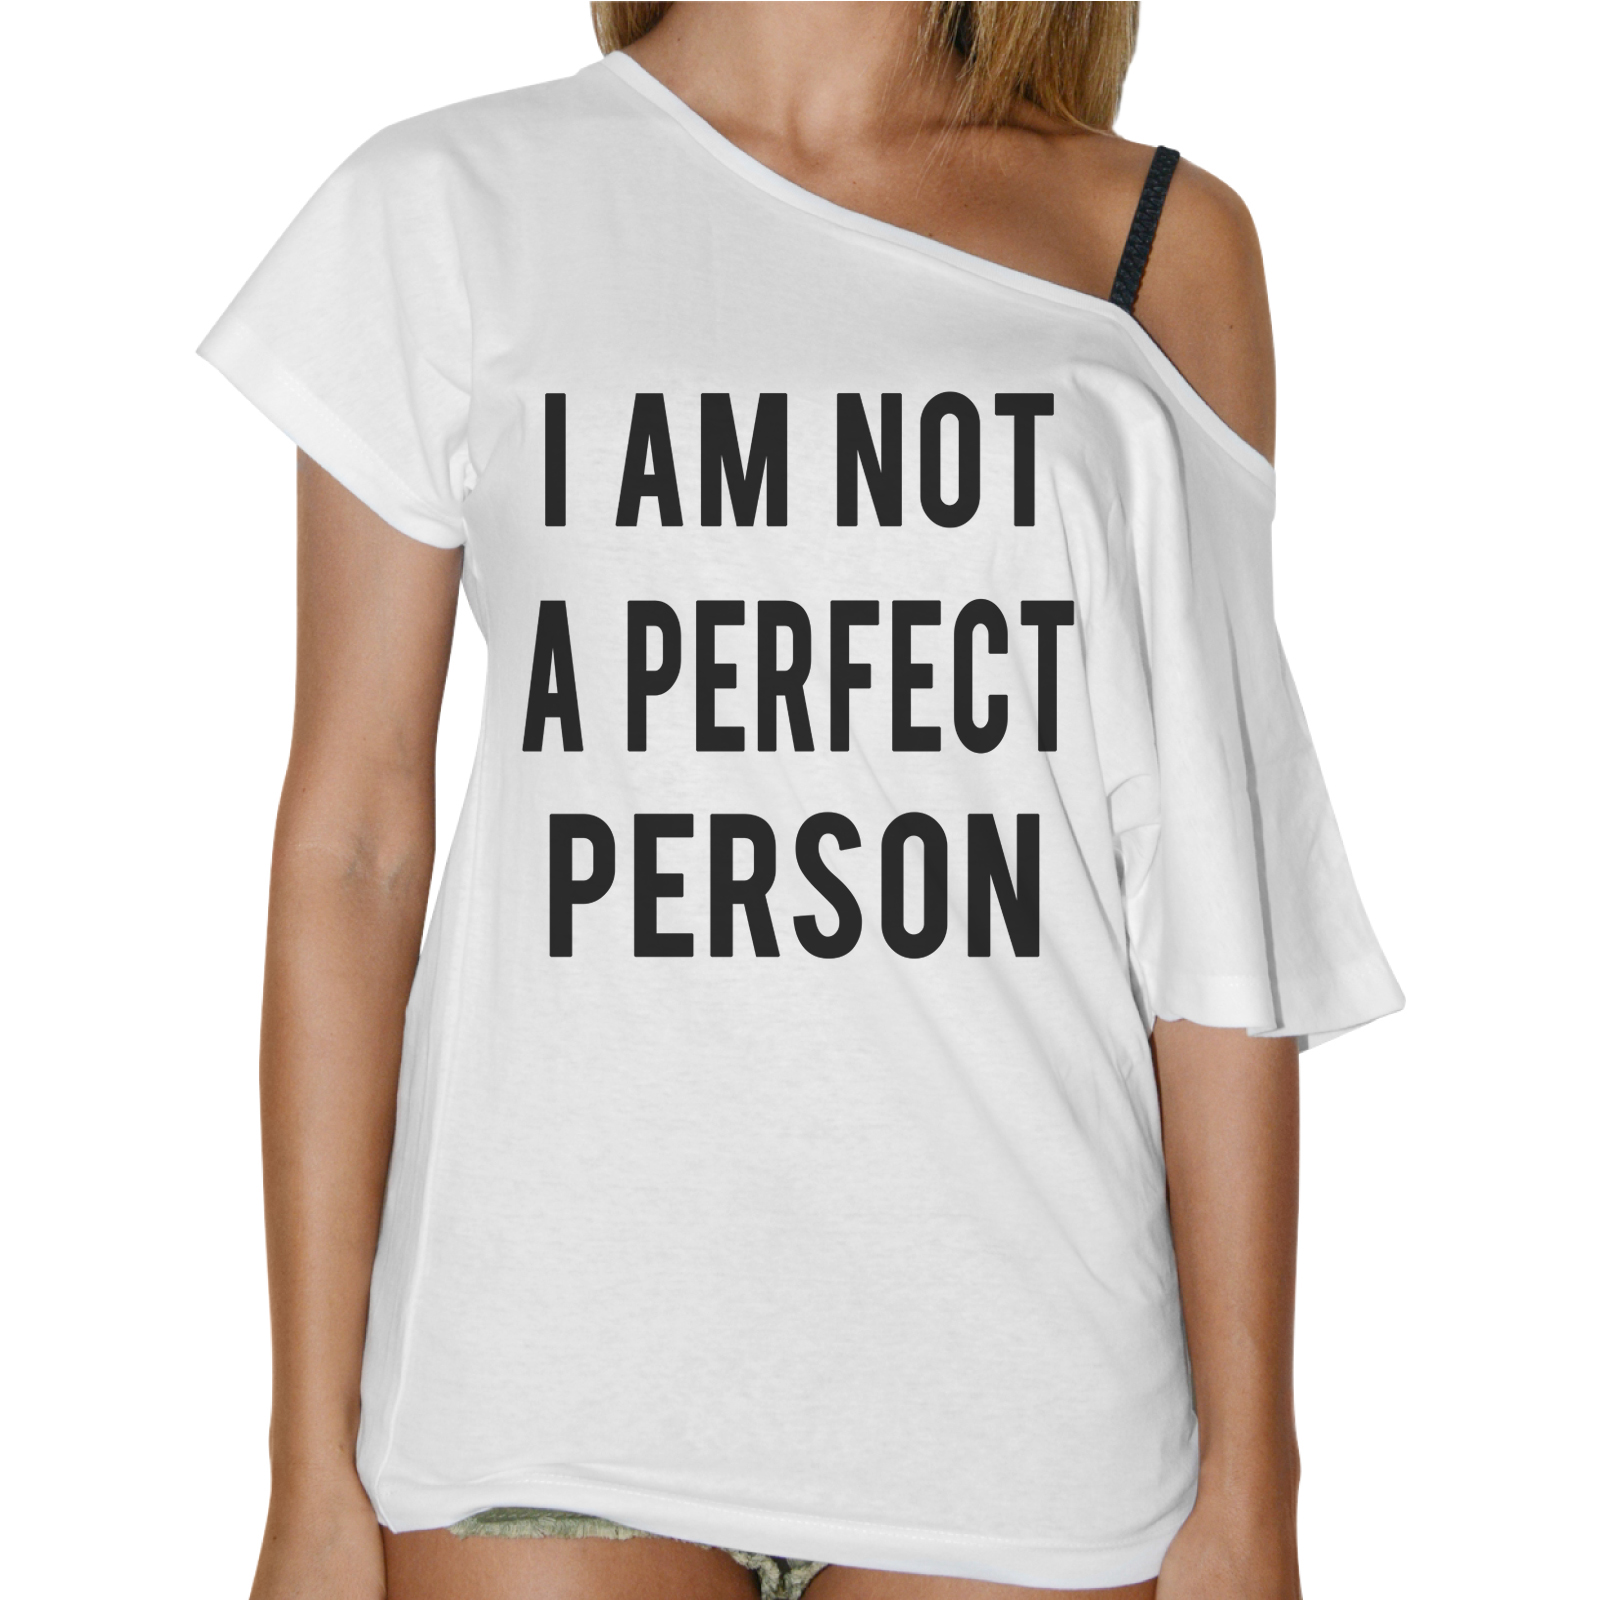 T-Shirt Donna Collo Barca NOT PERFECT 1